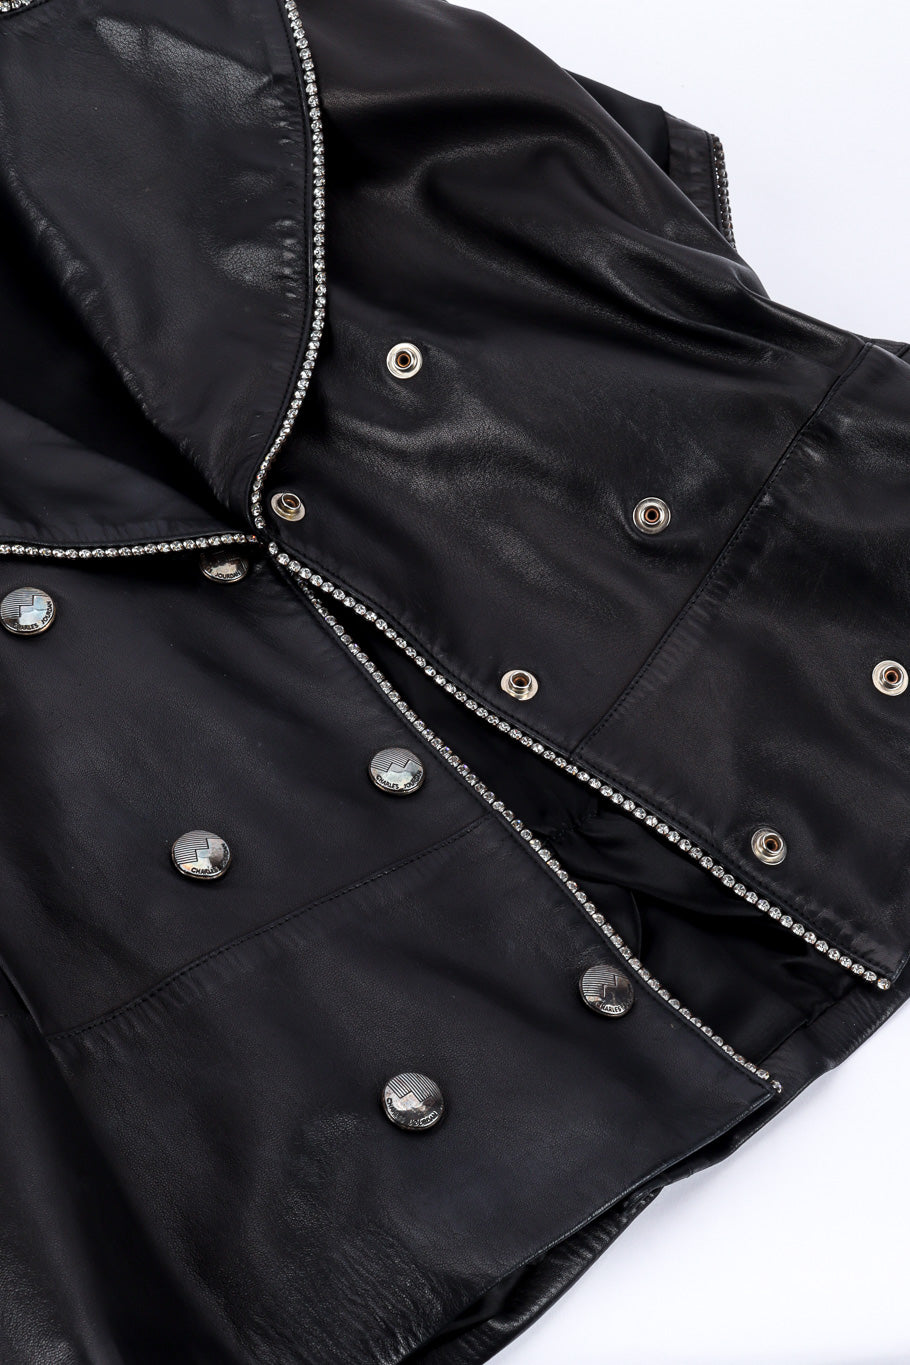 Vintage Charles Jourdan Leather Rhinestone Jacket button closure closeup @recessla